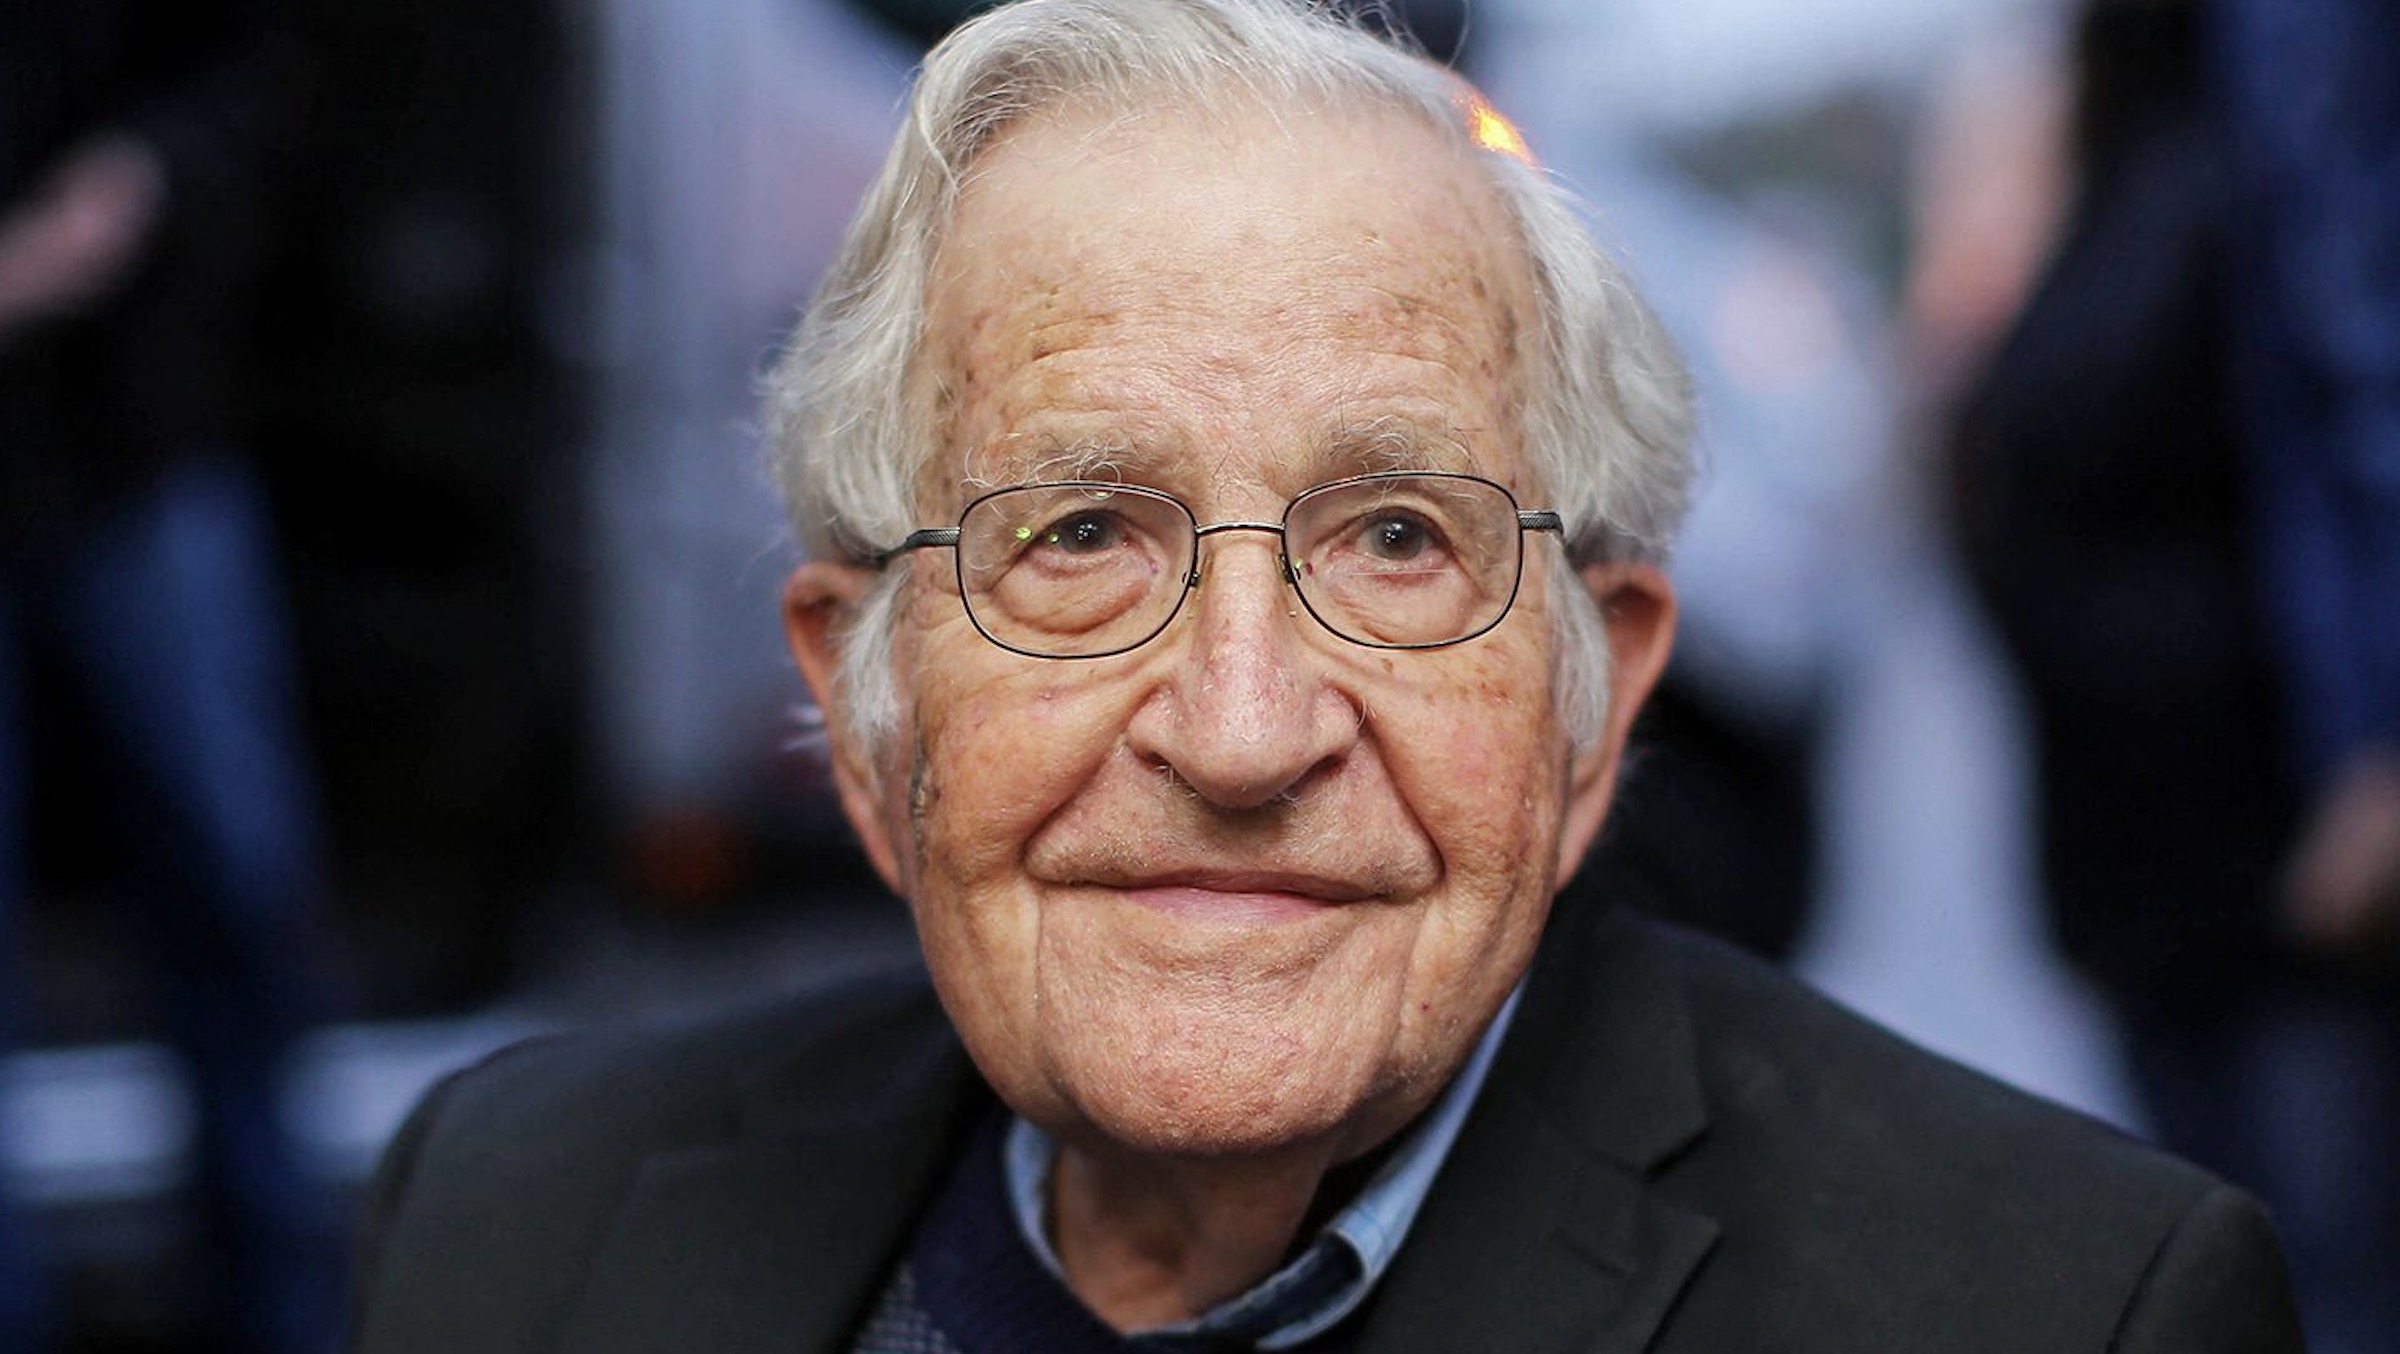 Addio a Noam Chomsky, il famoso intellettuale aveva 95 anni